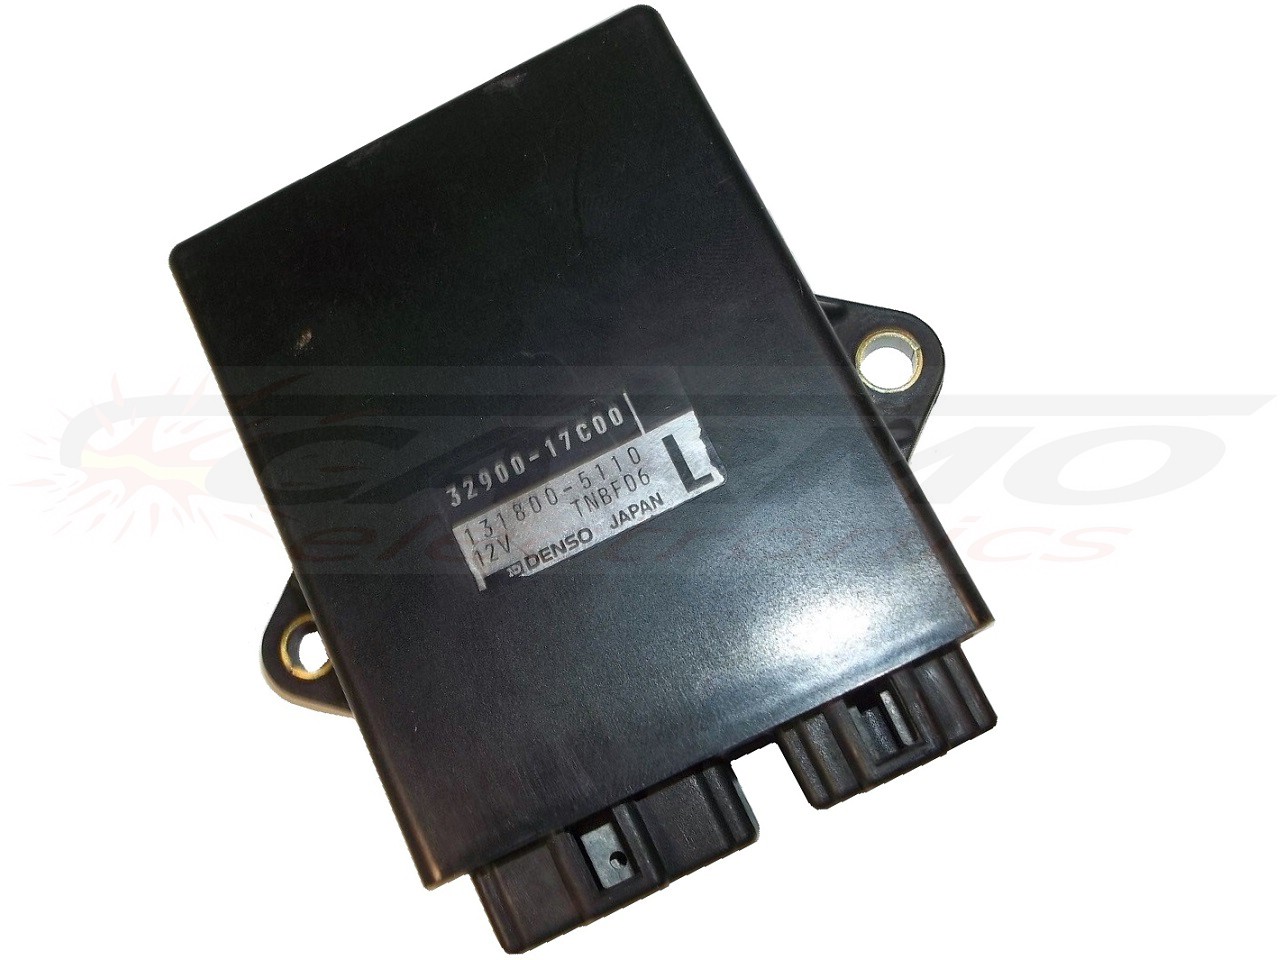 GSXR750 GSX-R750 igniter ignition module CDI TCI Box (32900-17C00 